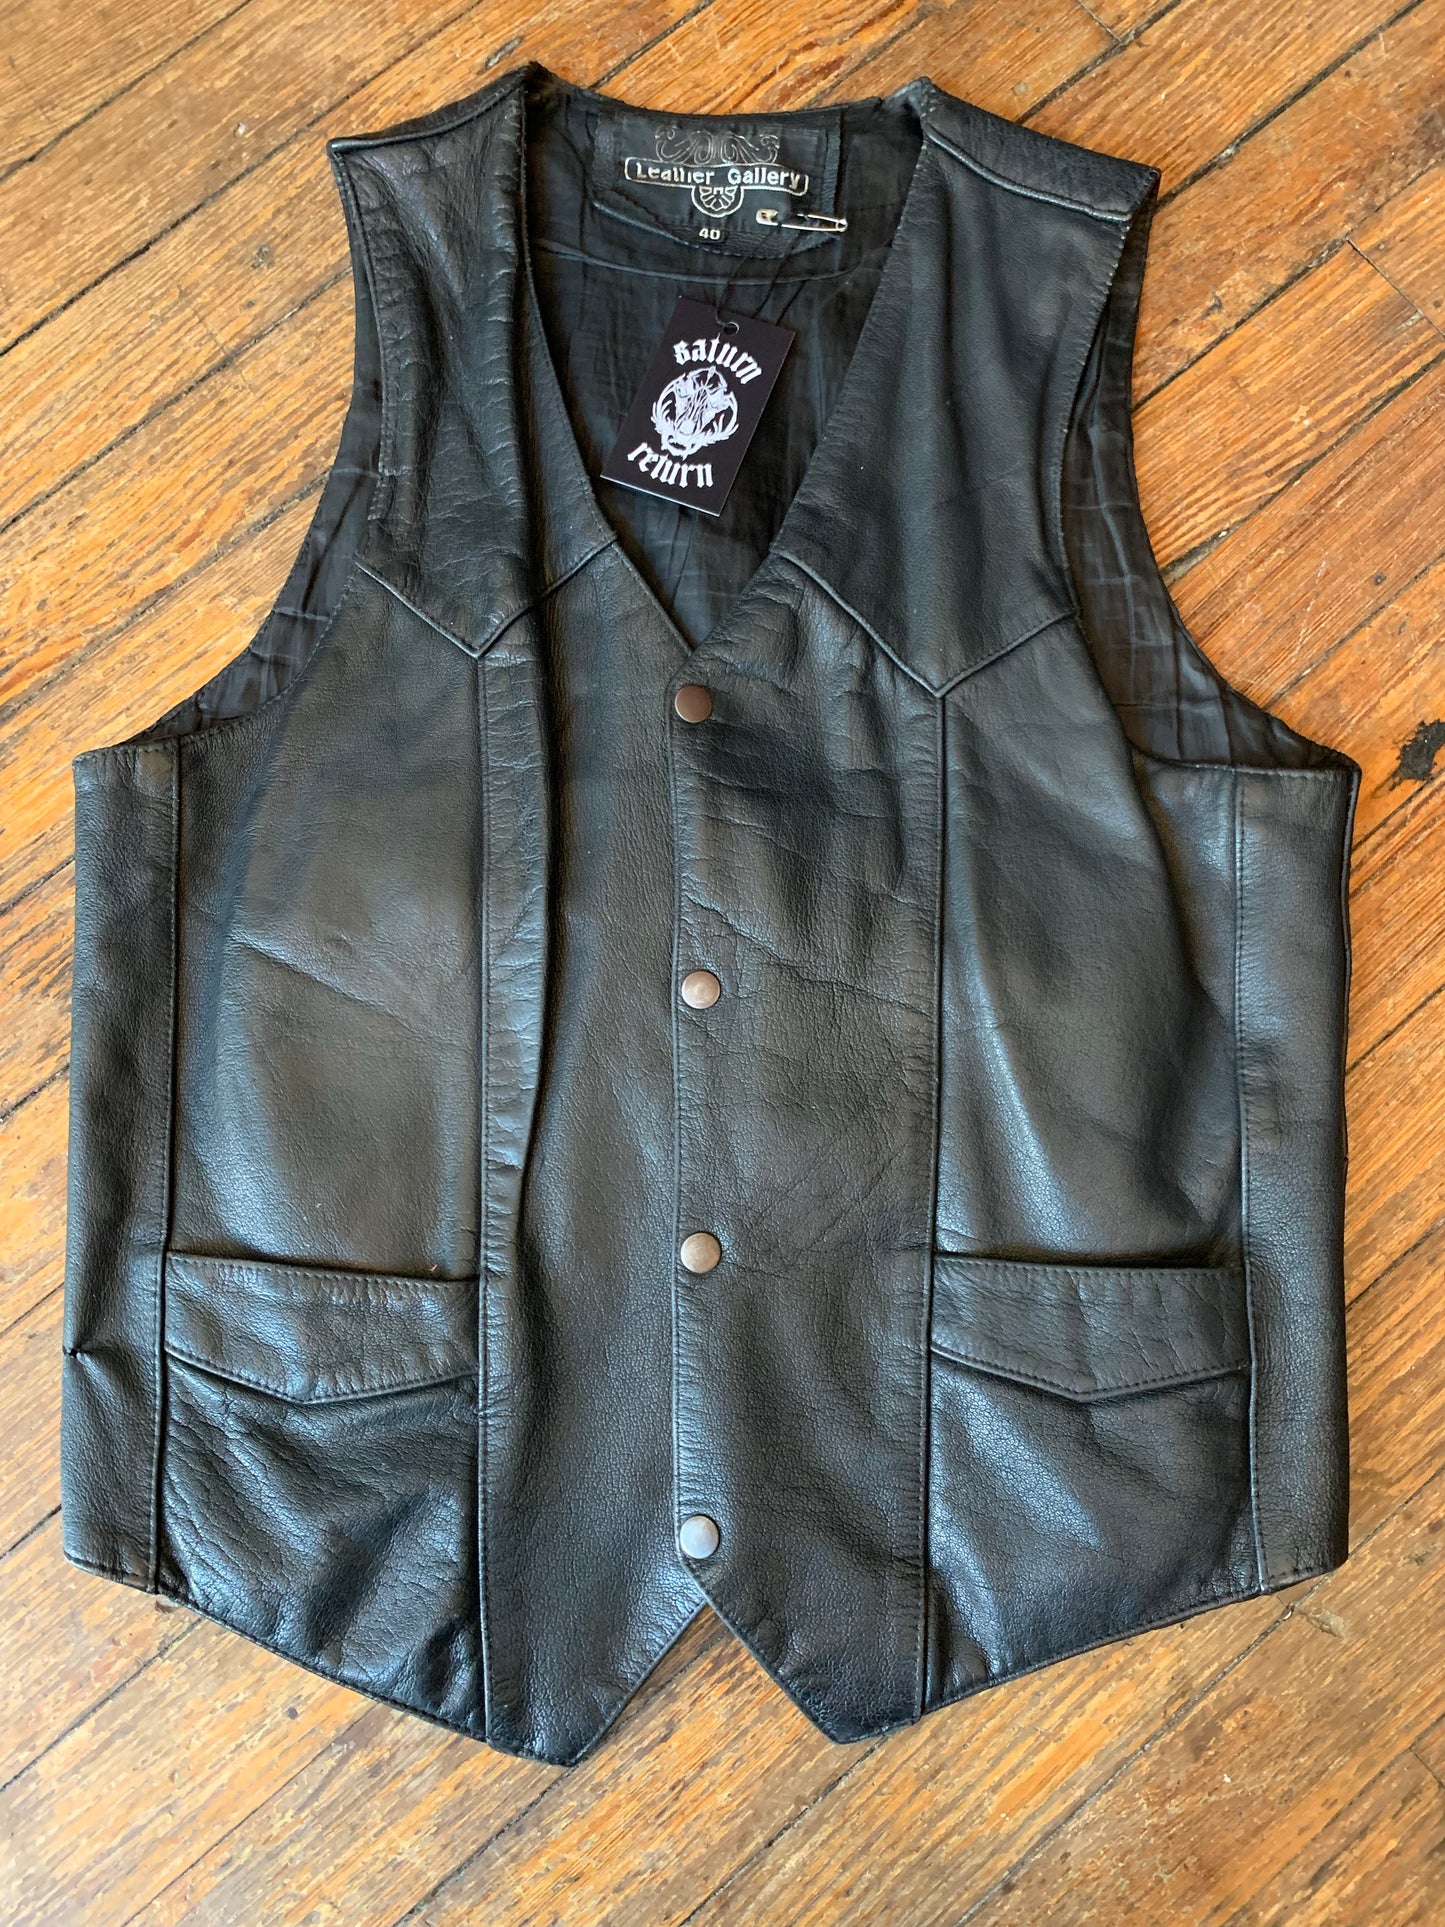 Vintage Leather Gallery Worn In Black Biker Vest